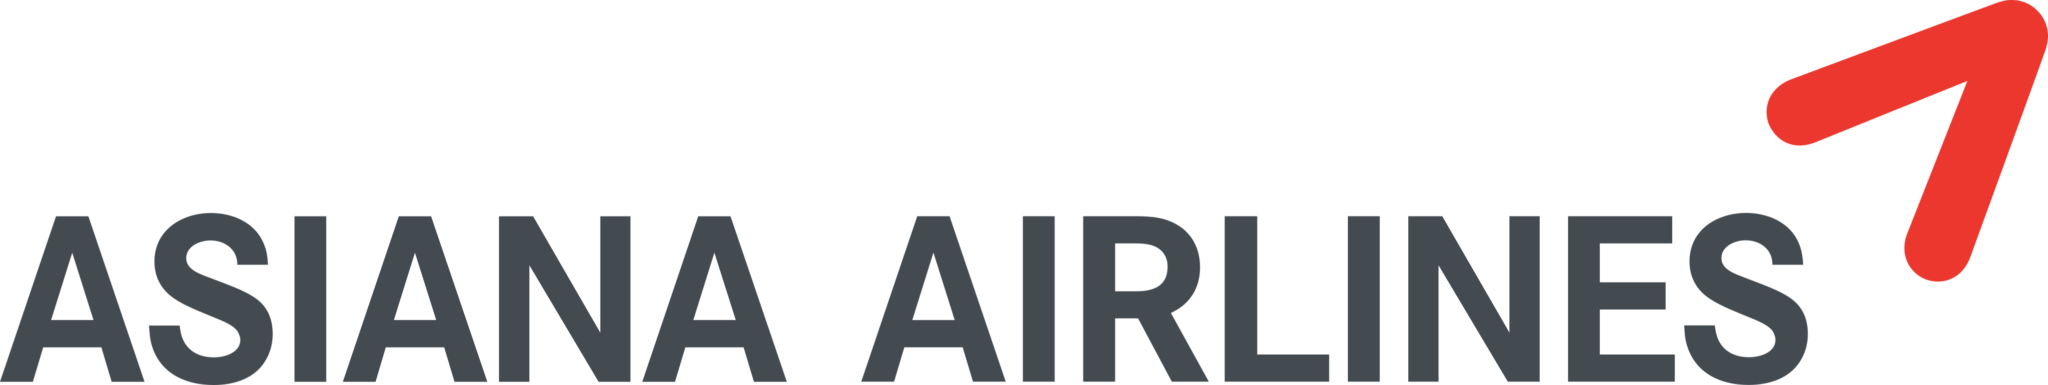 Asiana Airlines Logo - PNG e Vetor - Download de Logo